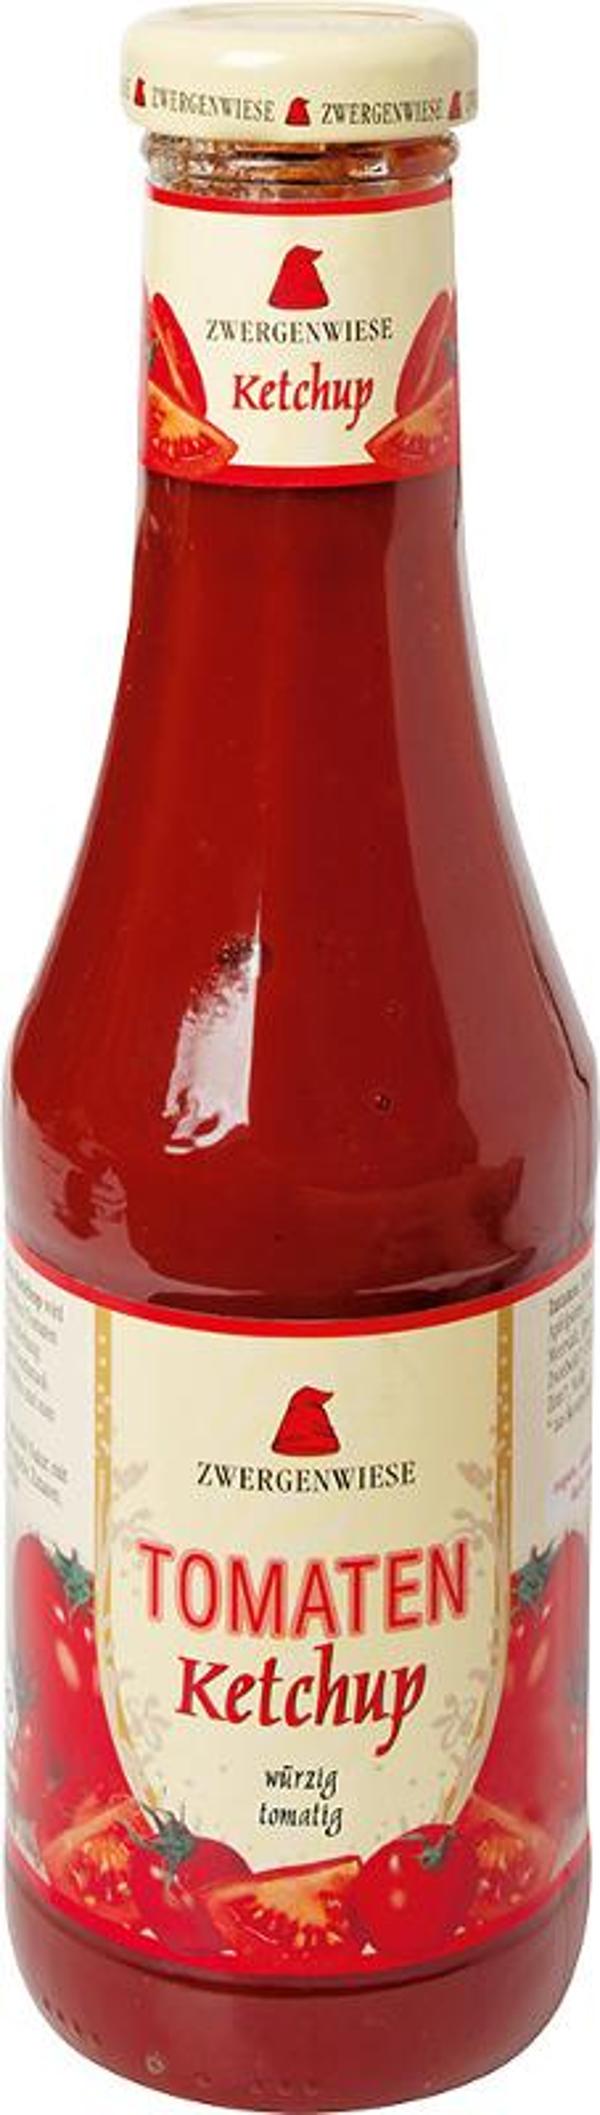 Produktfoto zu Tomatenketchup 450 ml